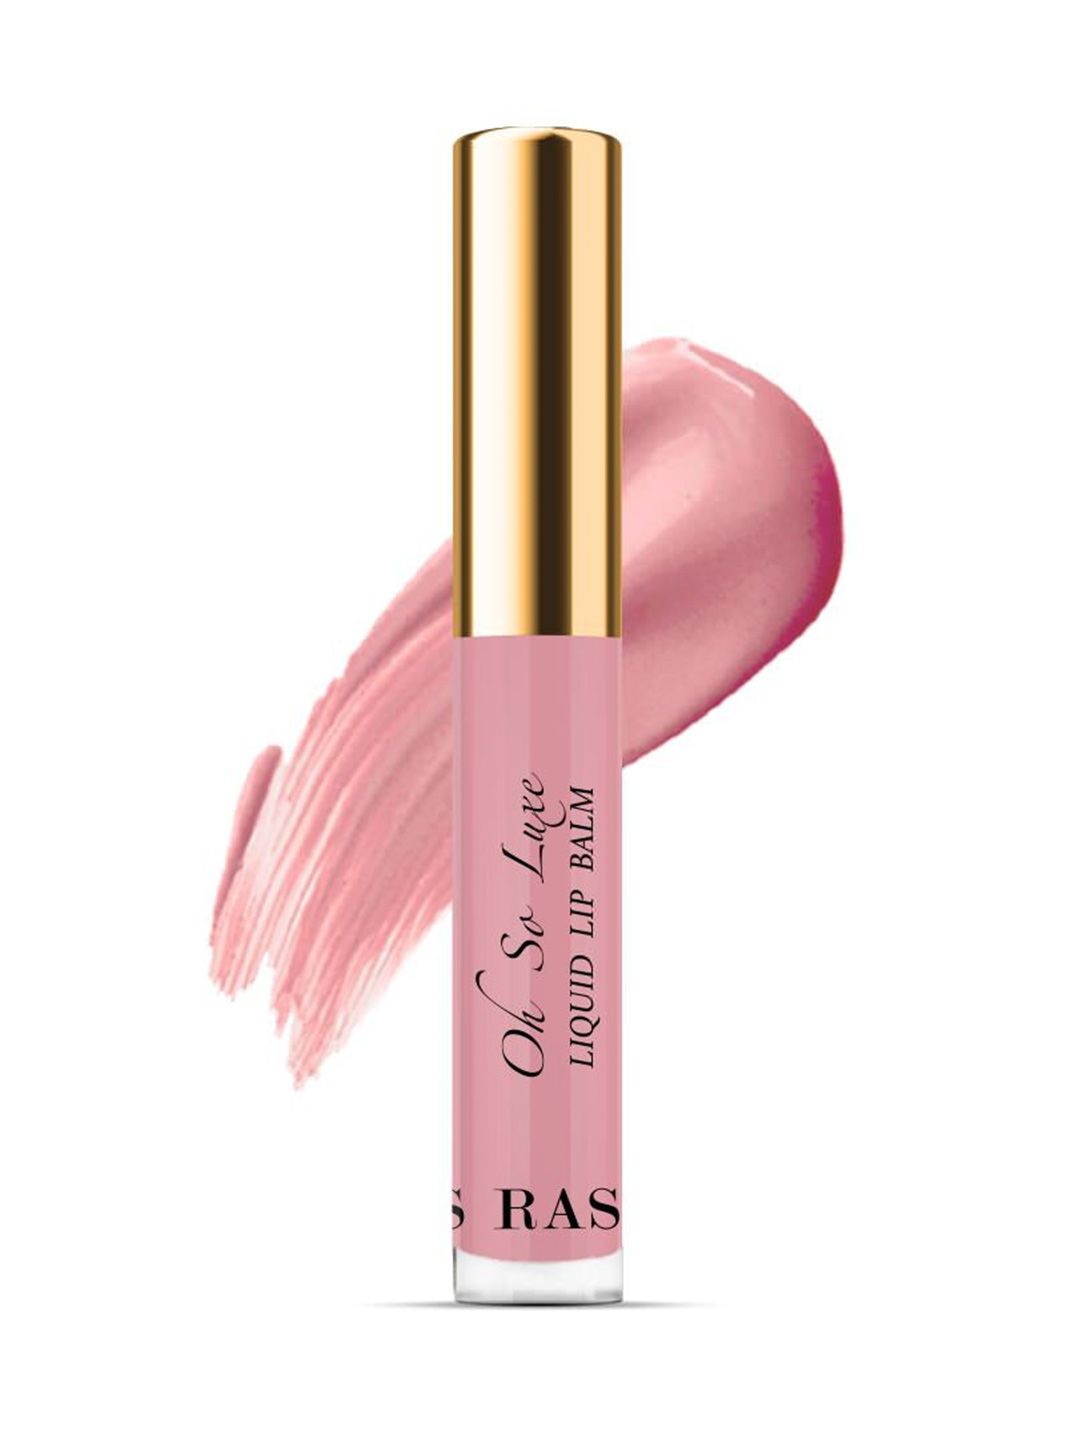 RAS LUXURY OILS Oh-So-Luxe Tinted Liquid Lip Balm - Rose Nude Price in India